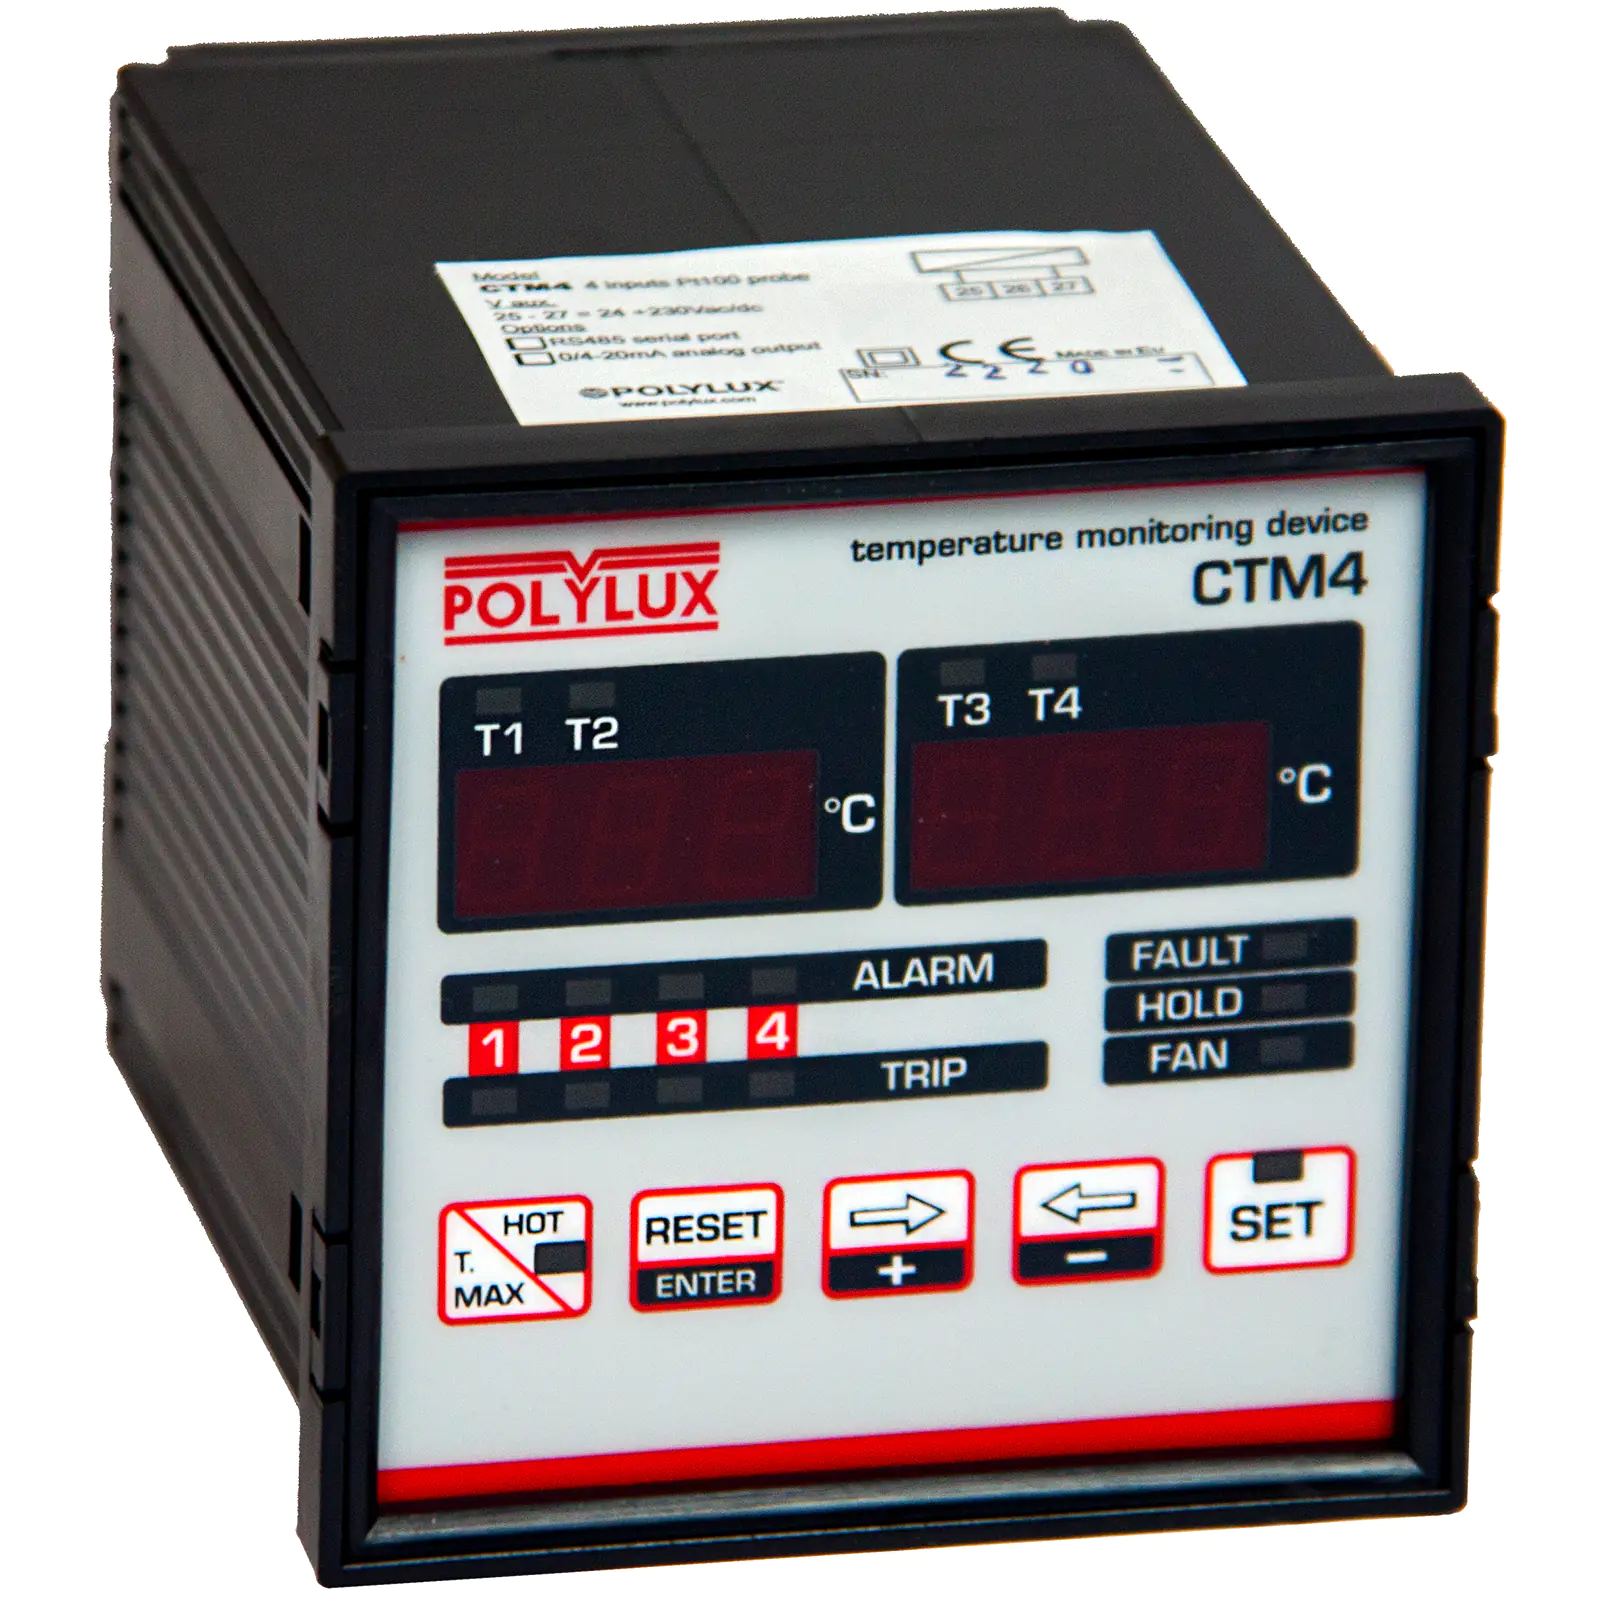 CTM 4 temperature monitoring device